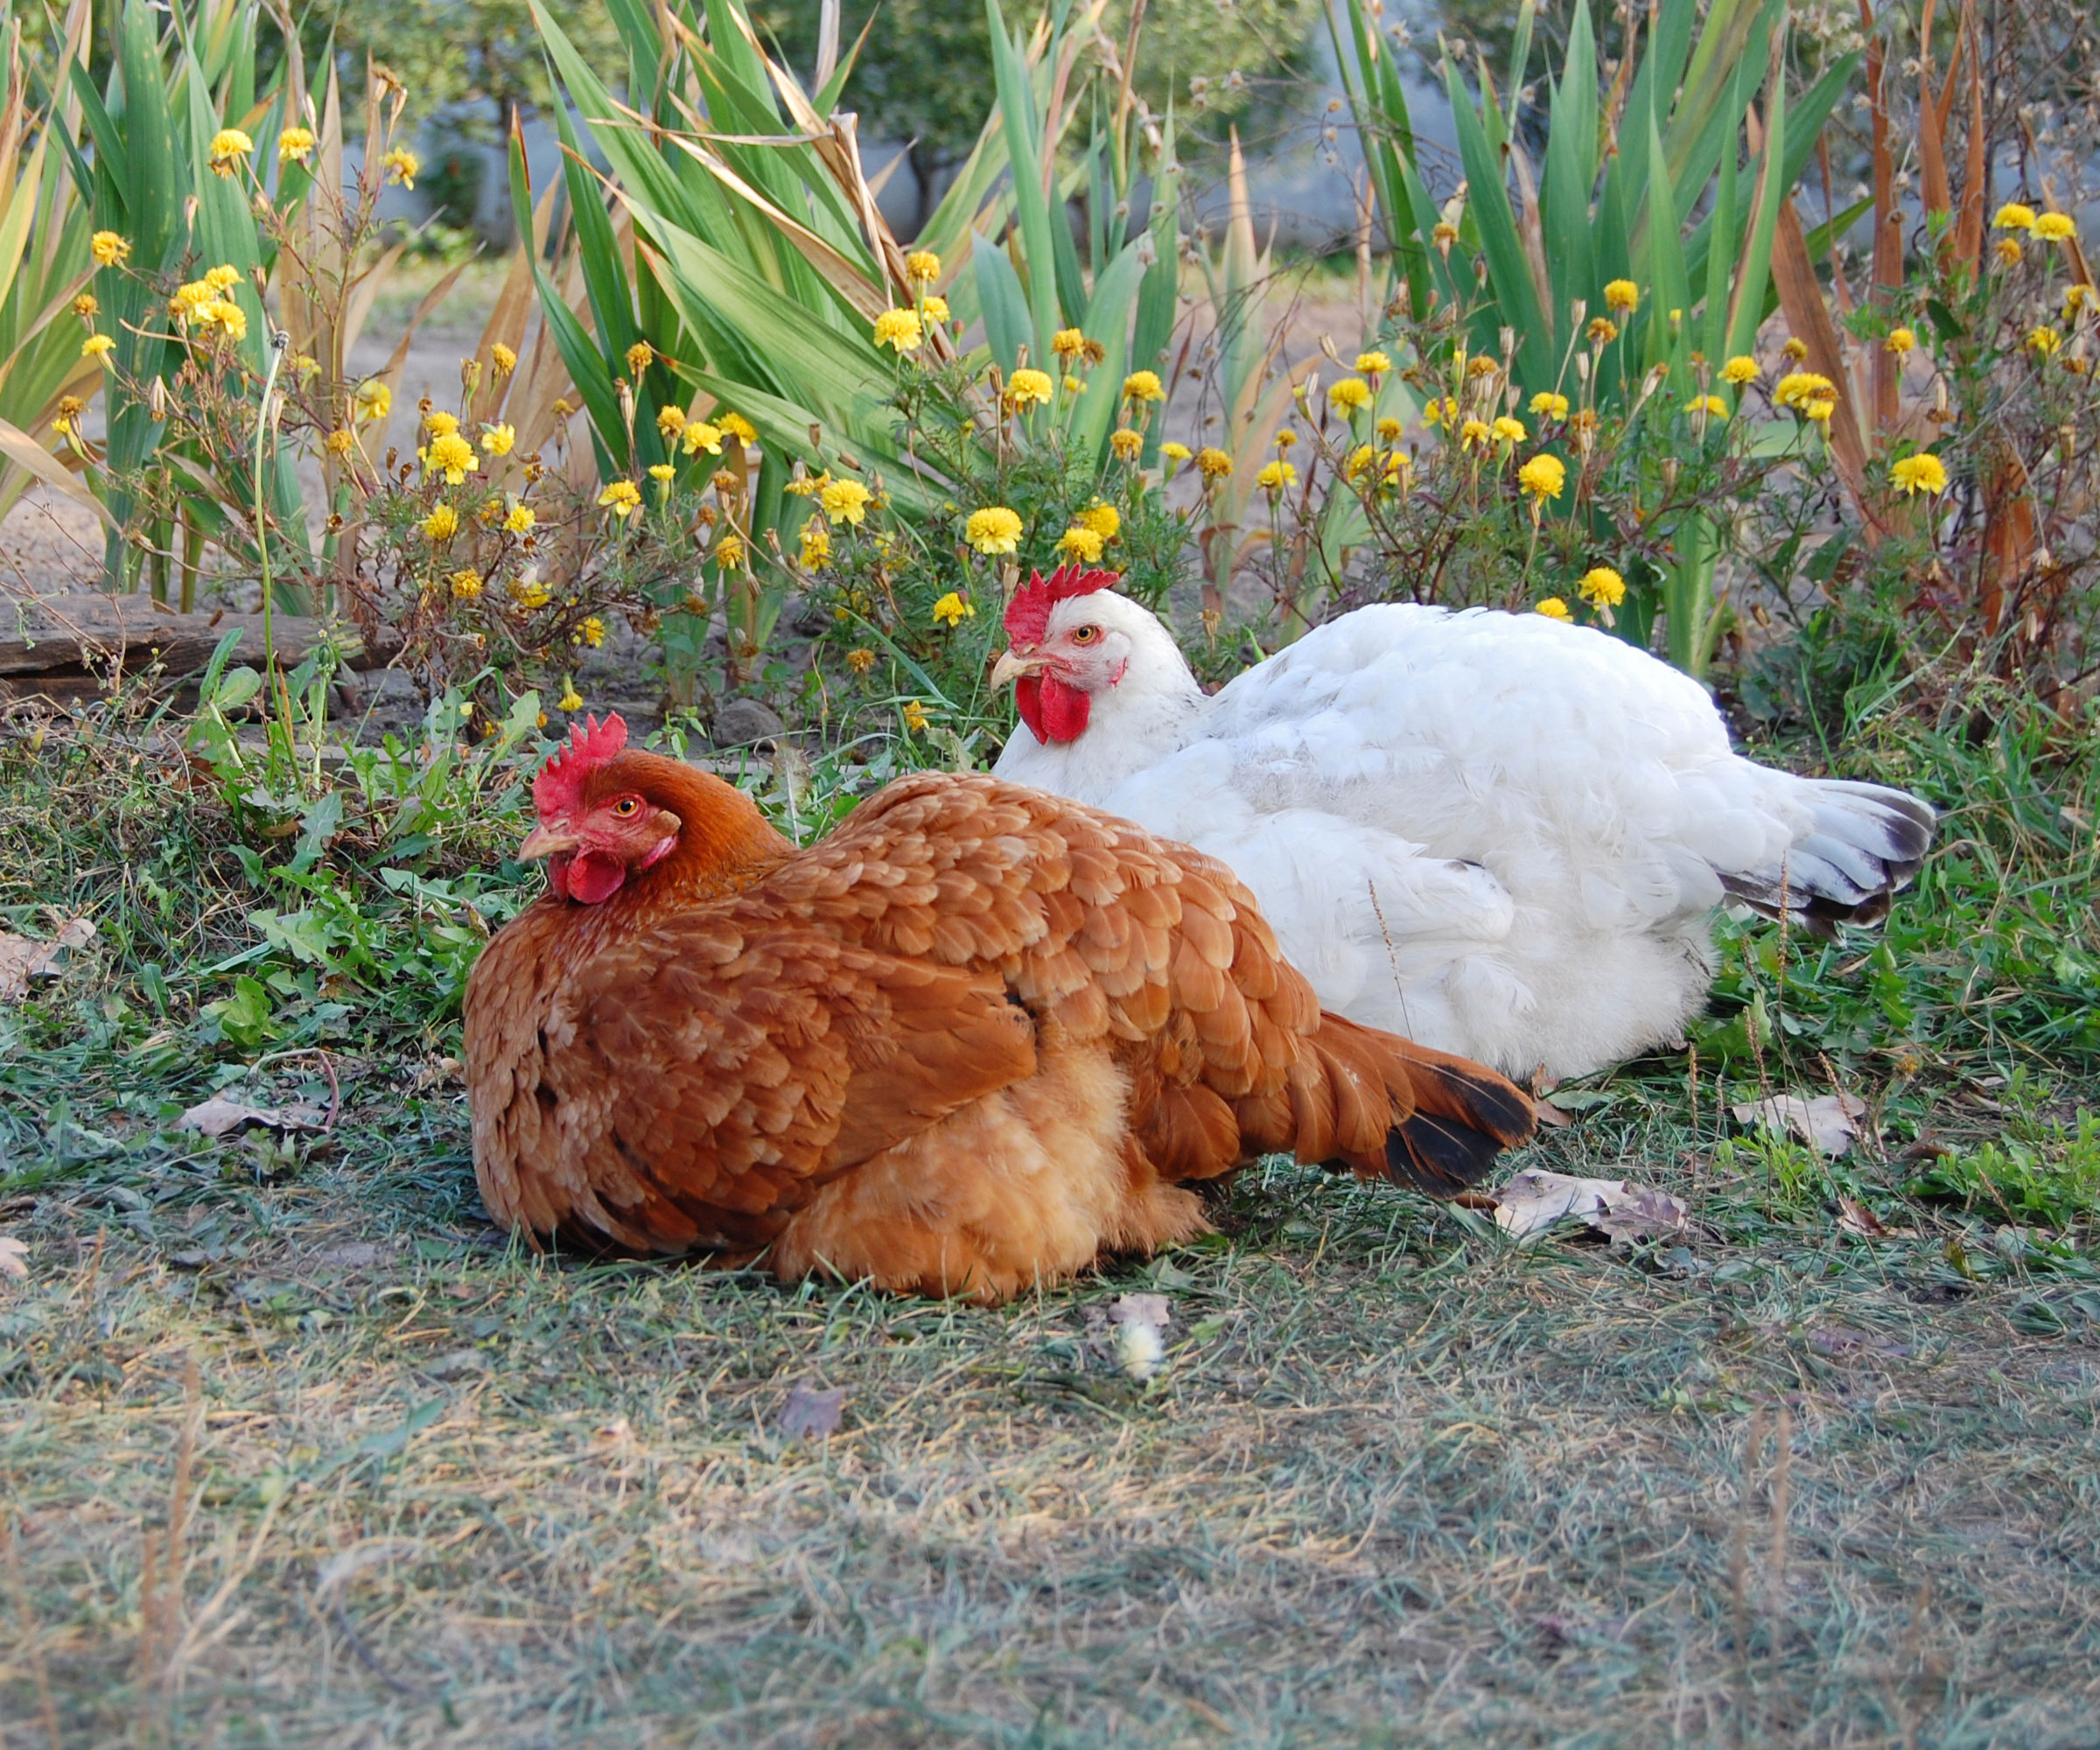 chickens resting in a garden